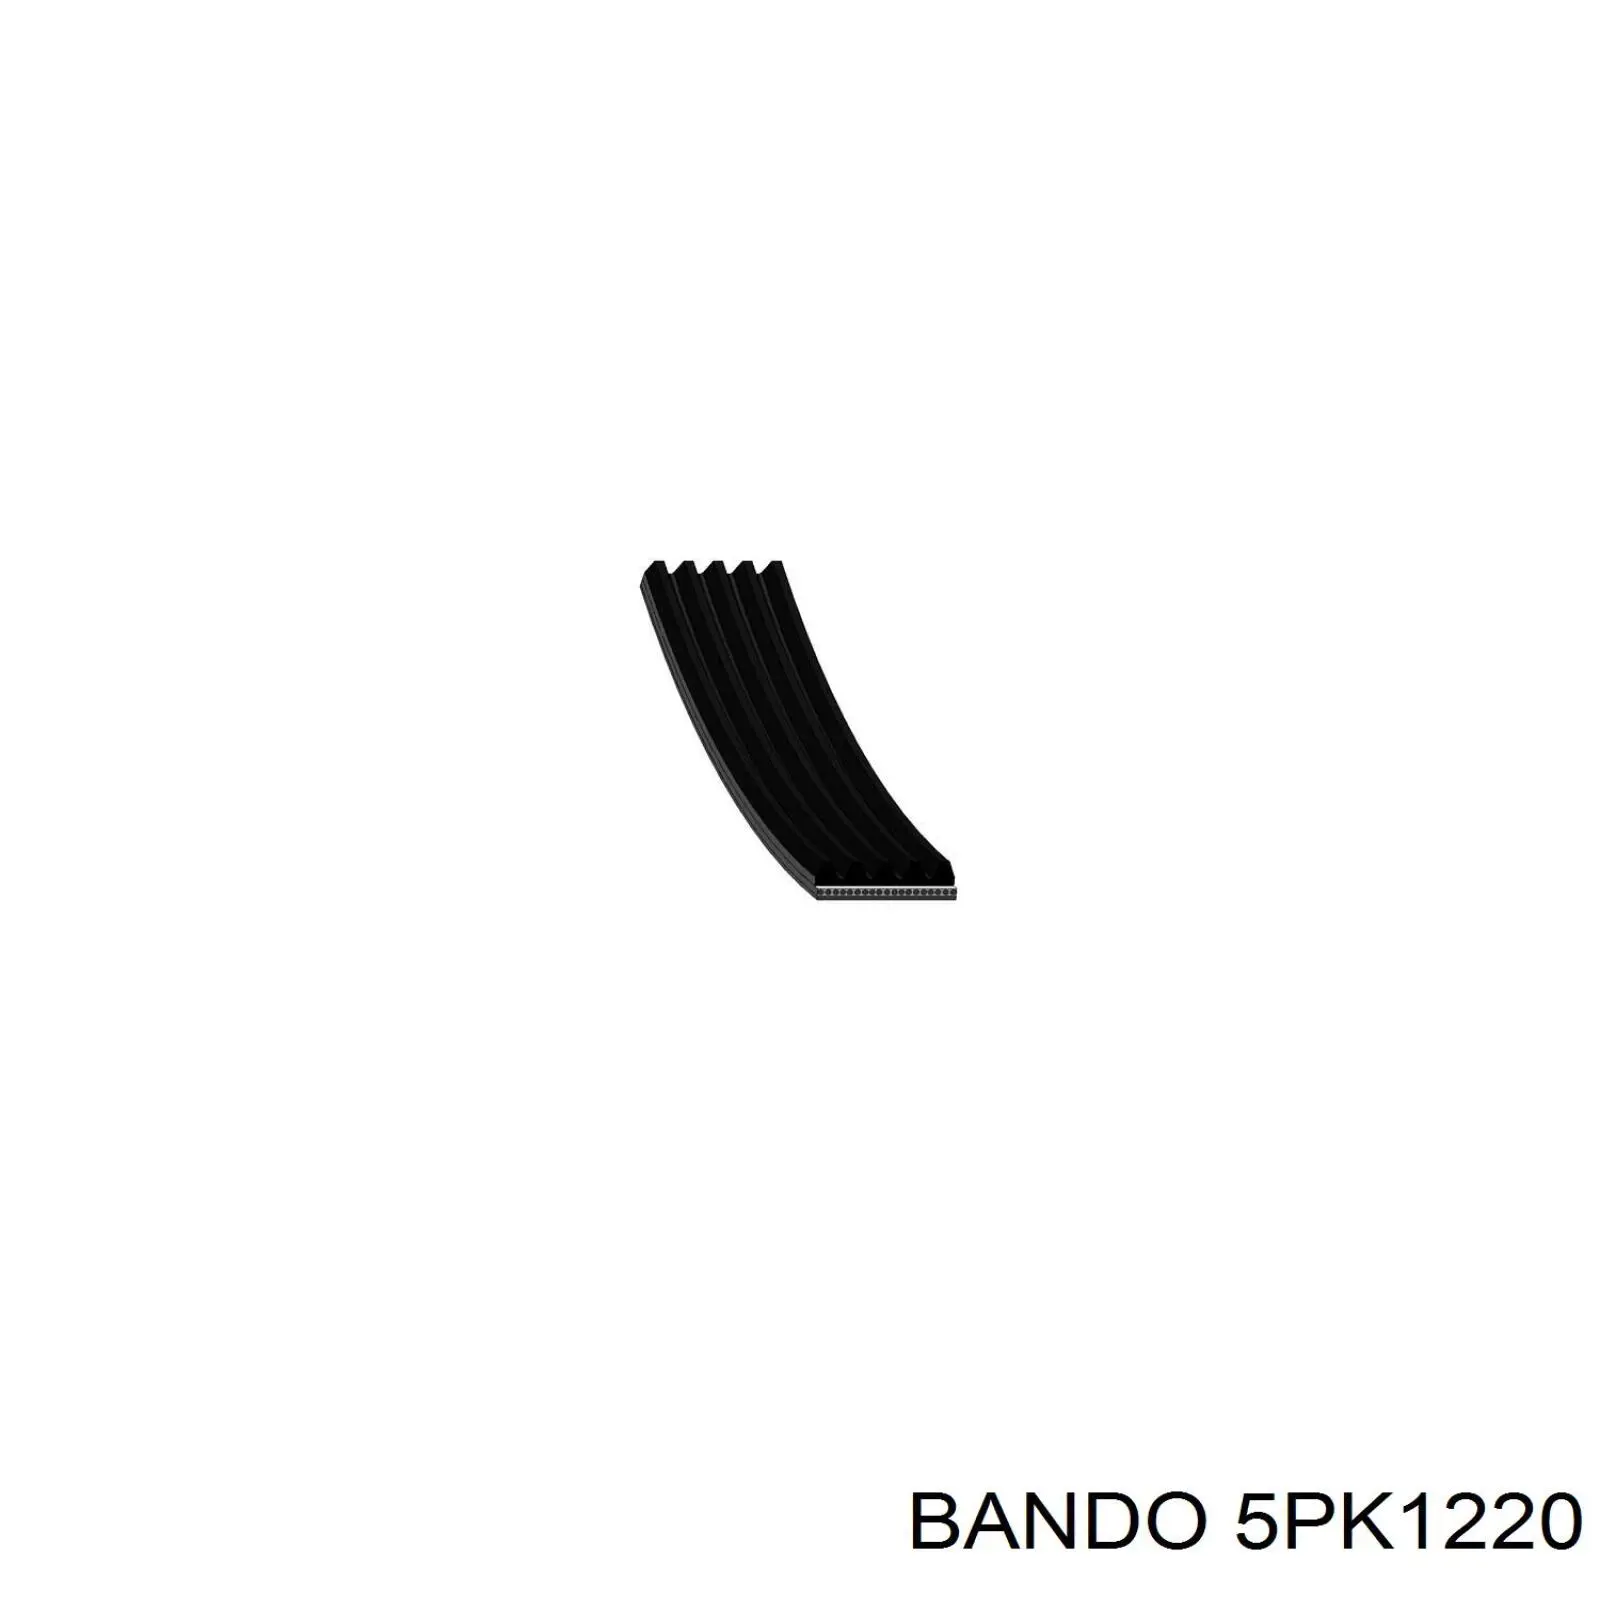 5PK1220 Bando correa trapezoidal